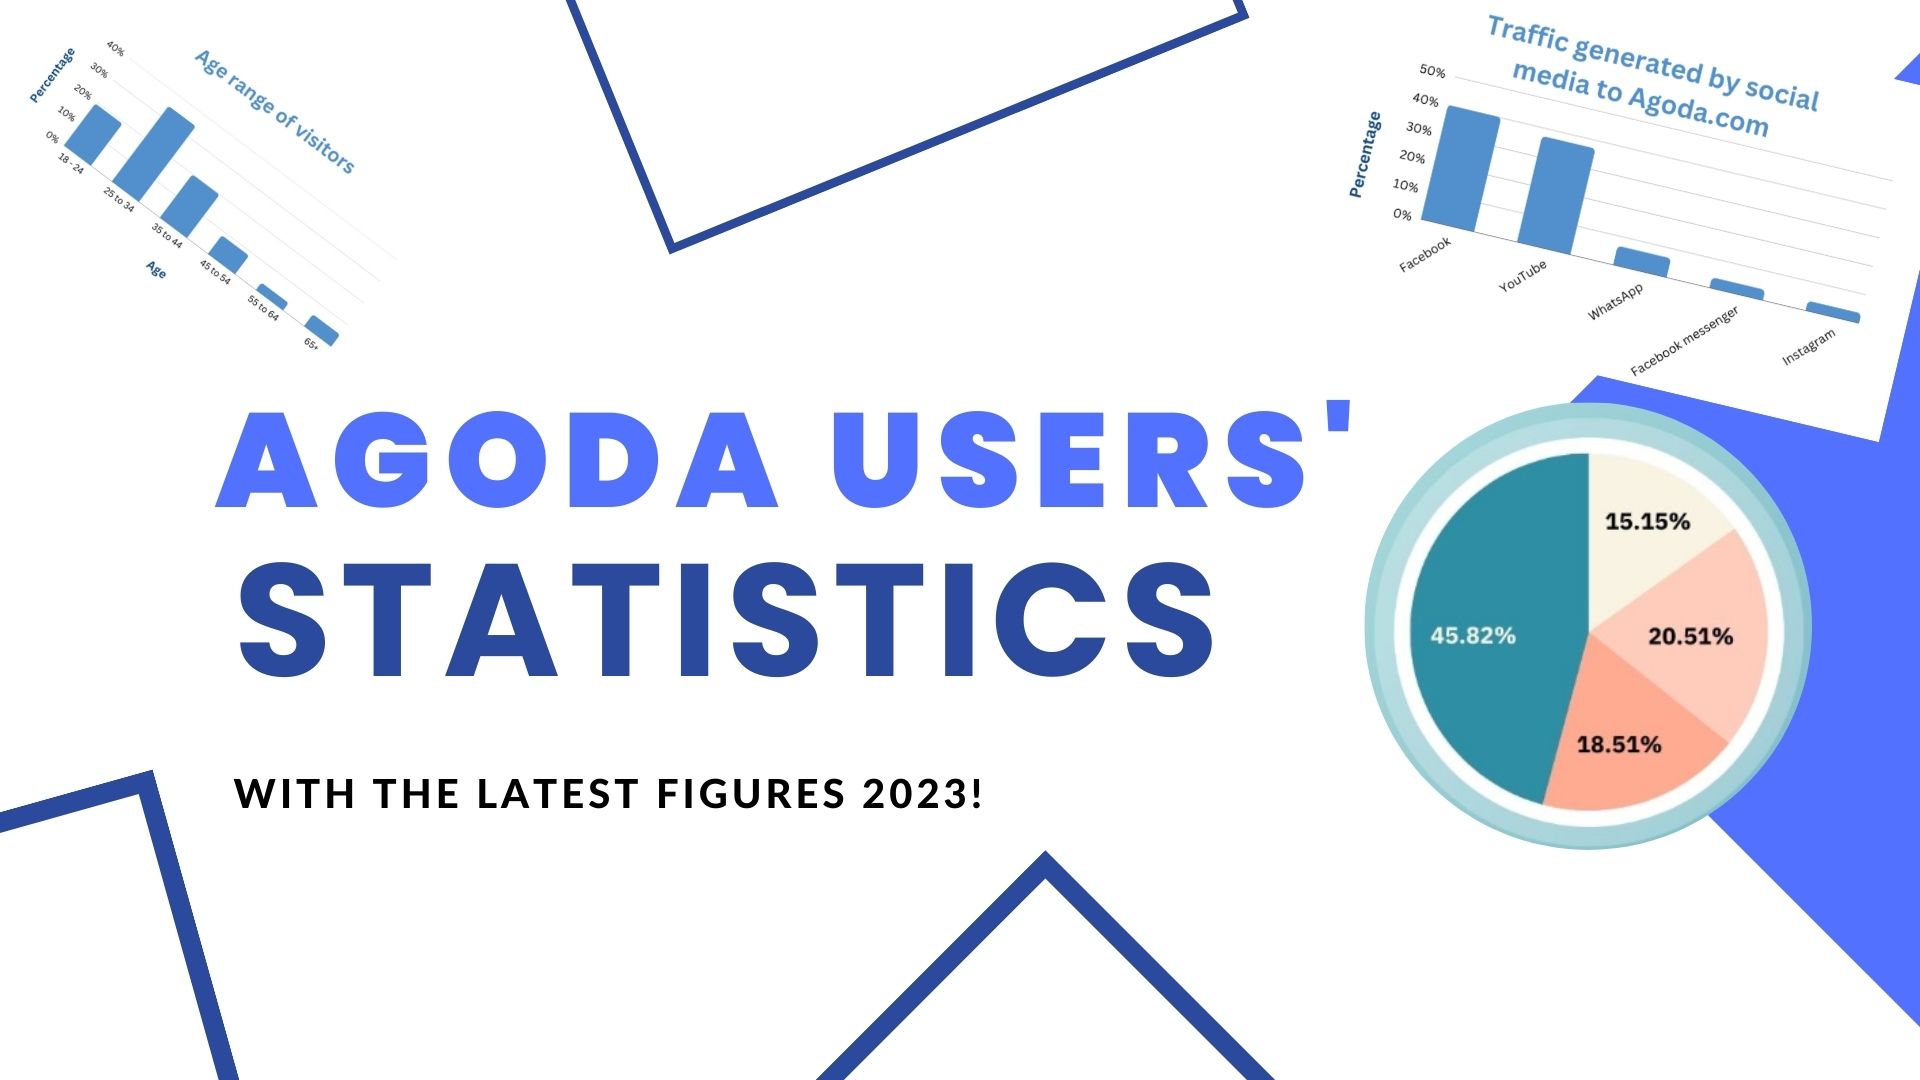 Agoda users' Statistics